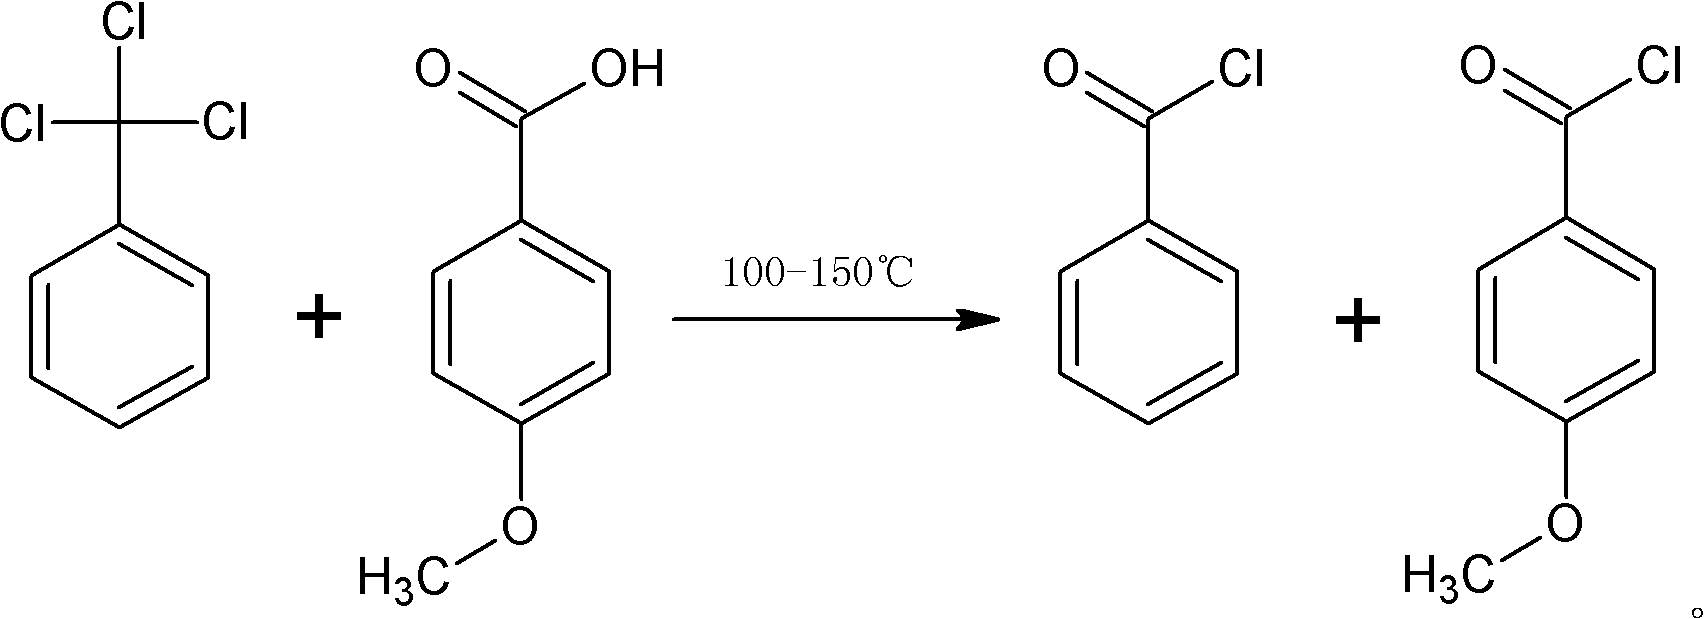 Preparation method of p-anisoyl chloride